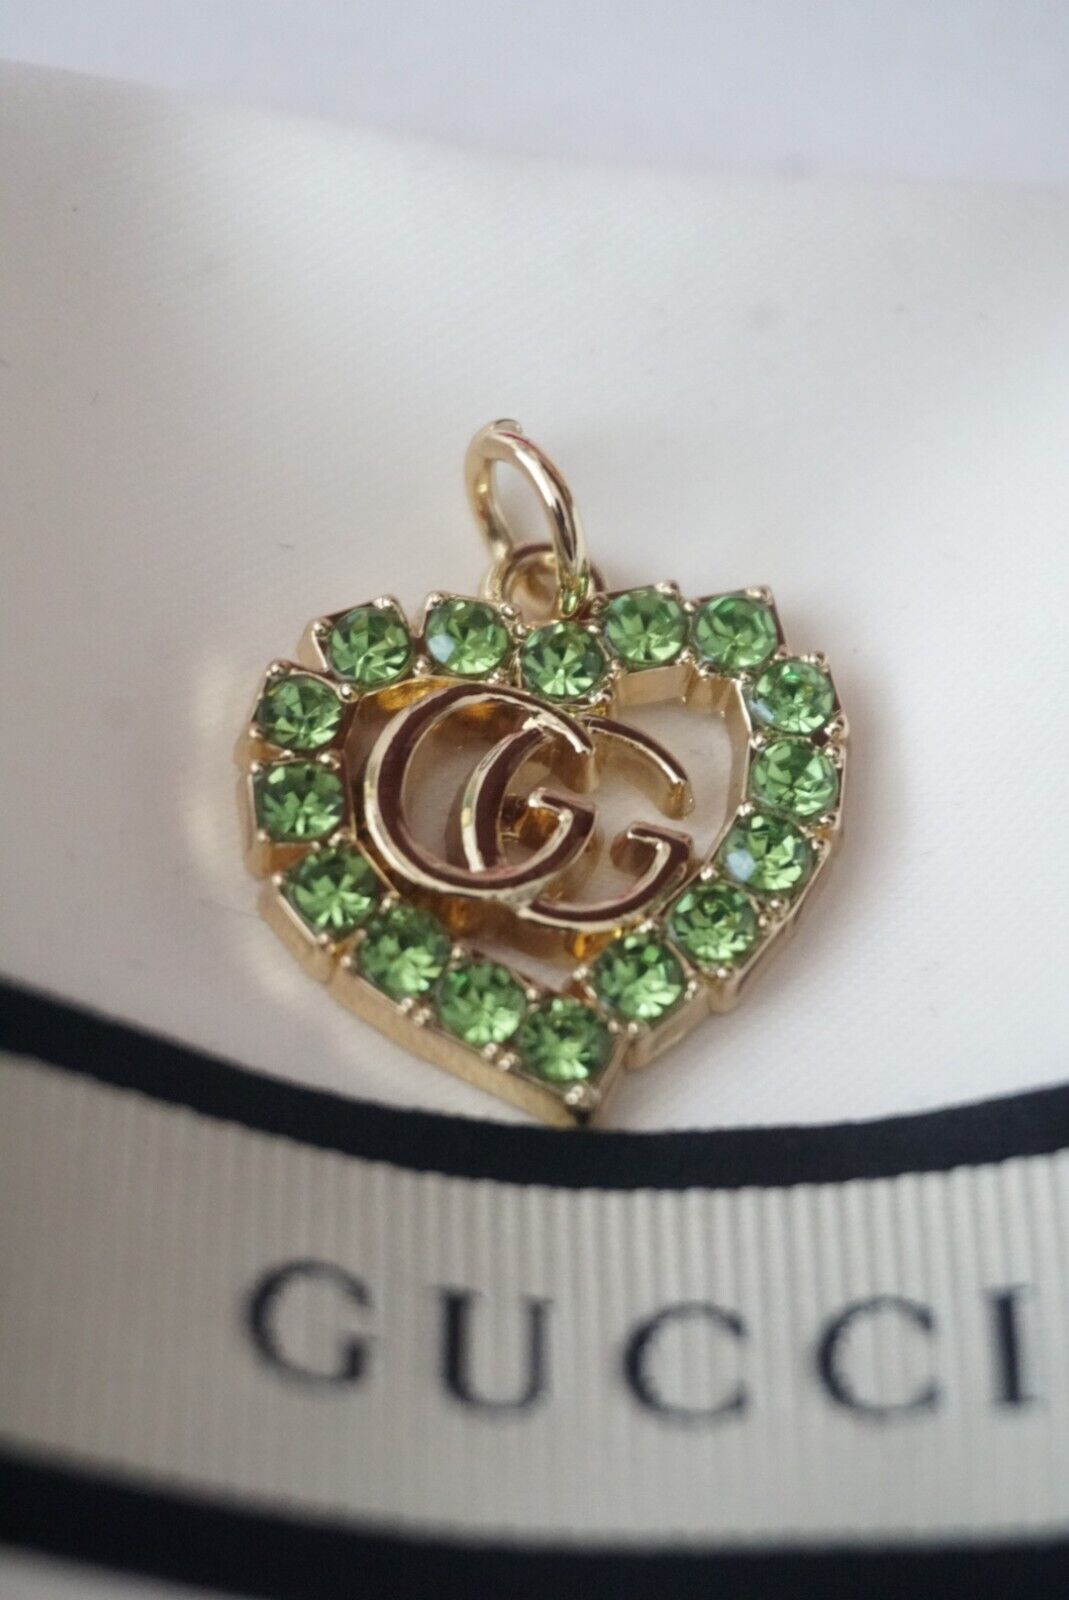 One Gucci  zipper pull 1 inch   GG logo   metal gold / green